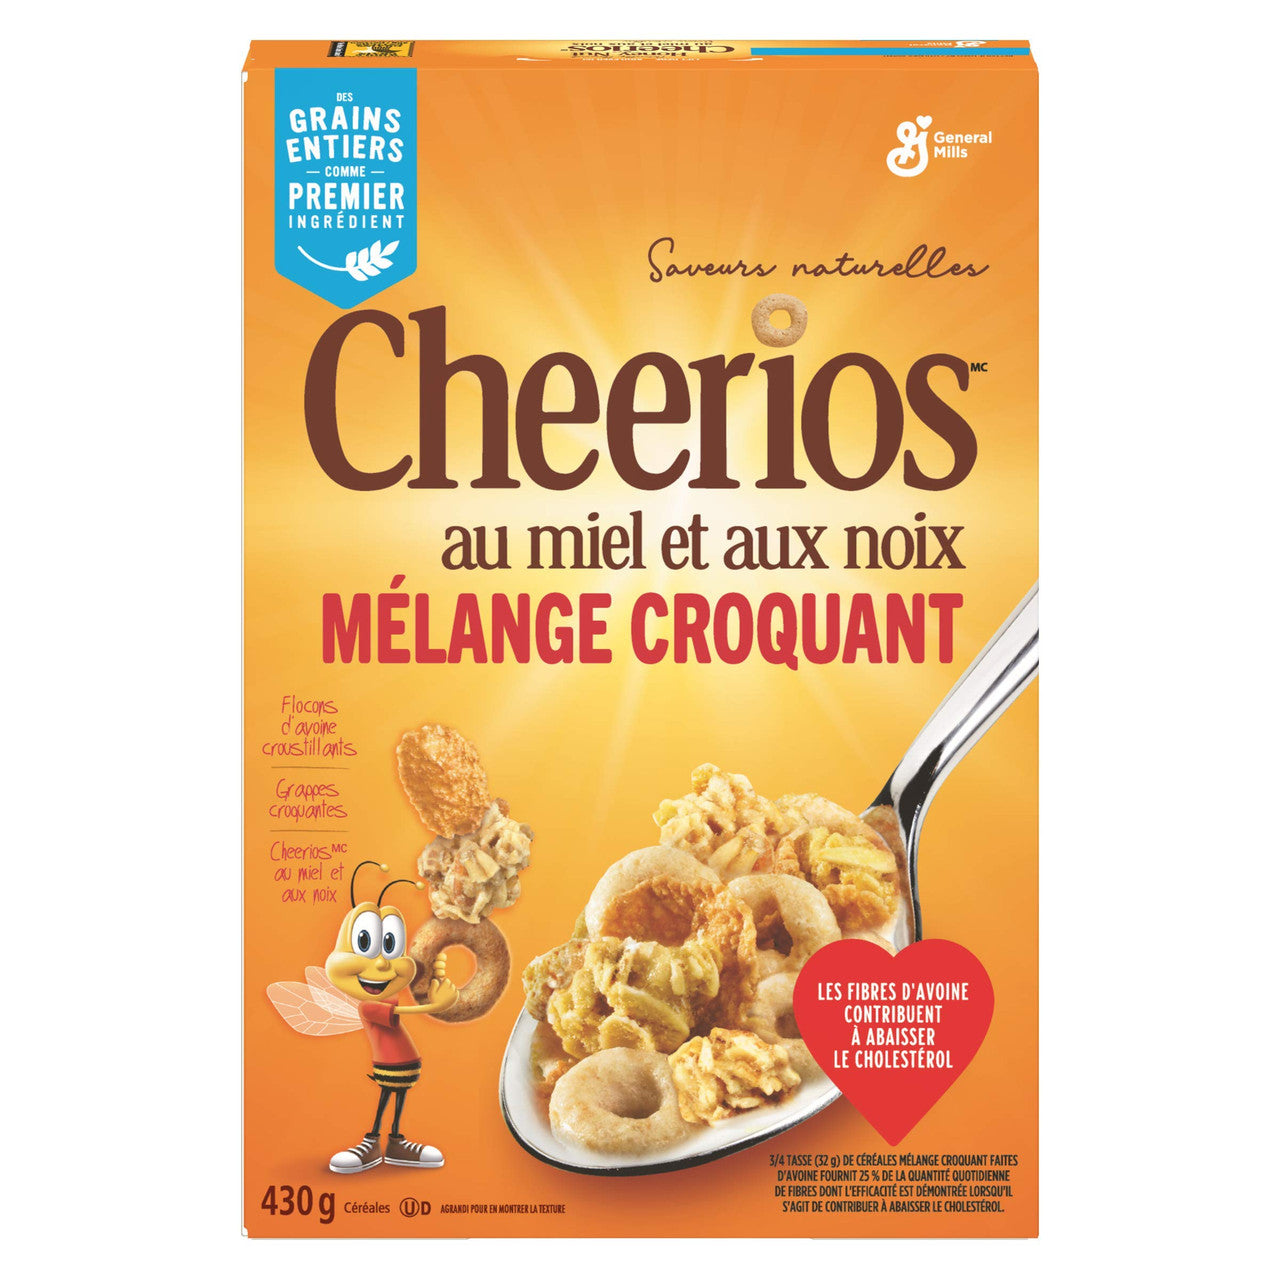 Cheerios Honey Nut Medley Crunch Cereal 